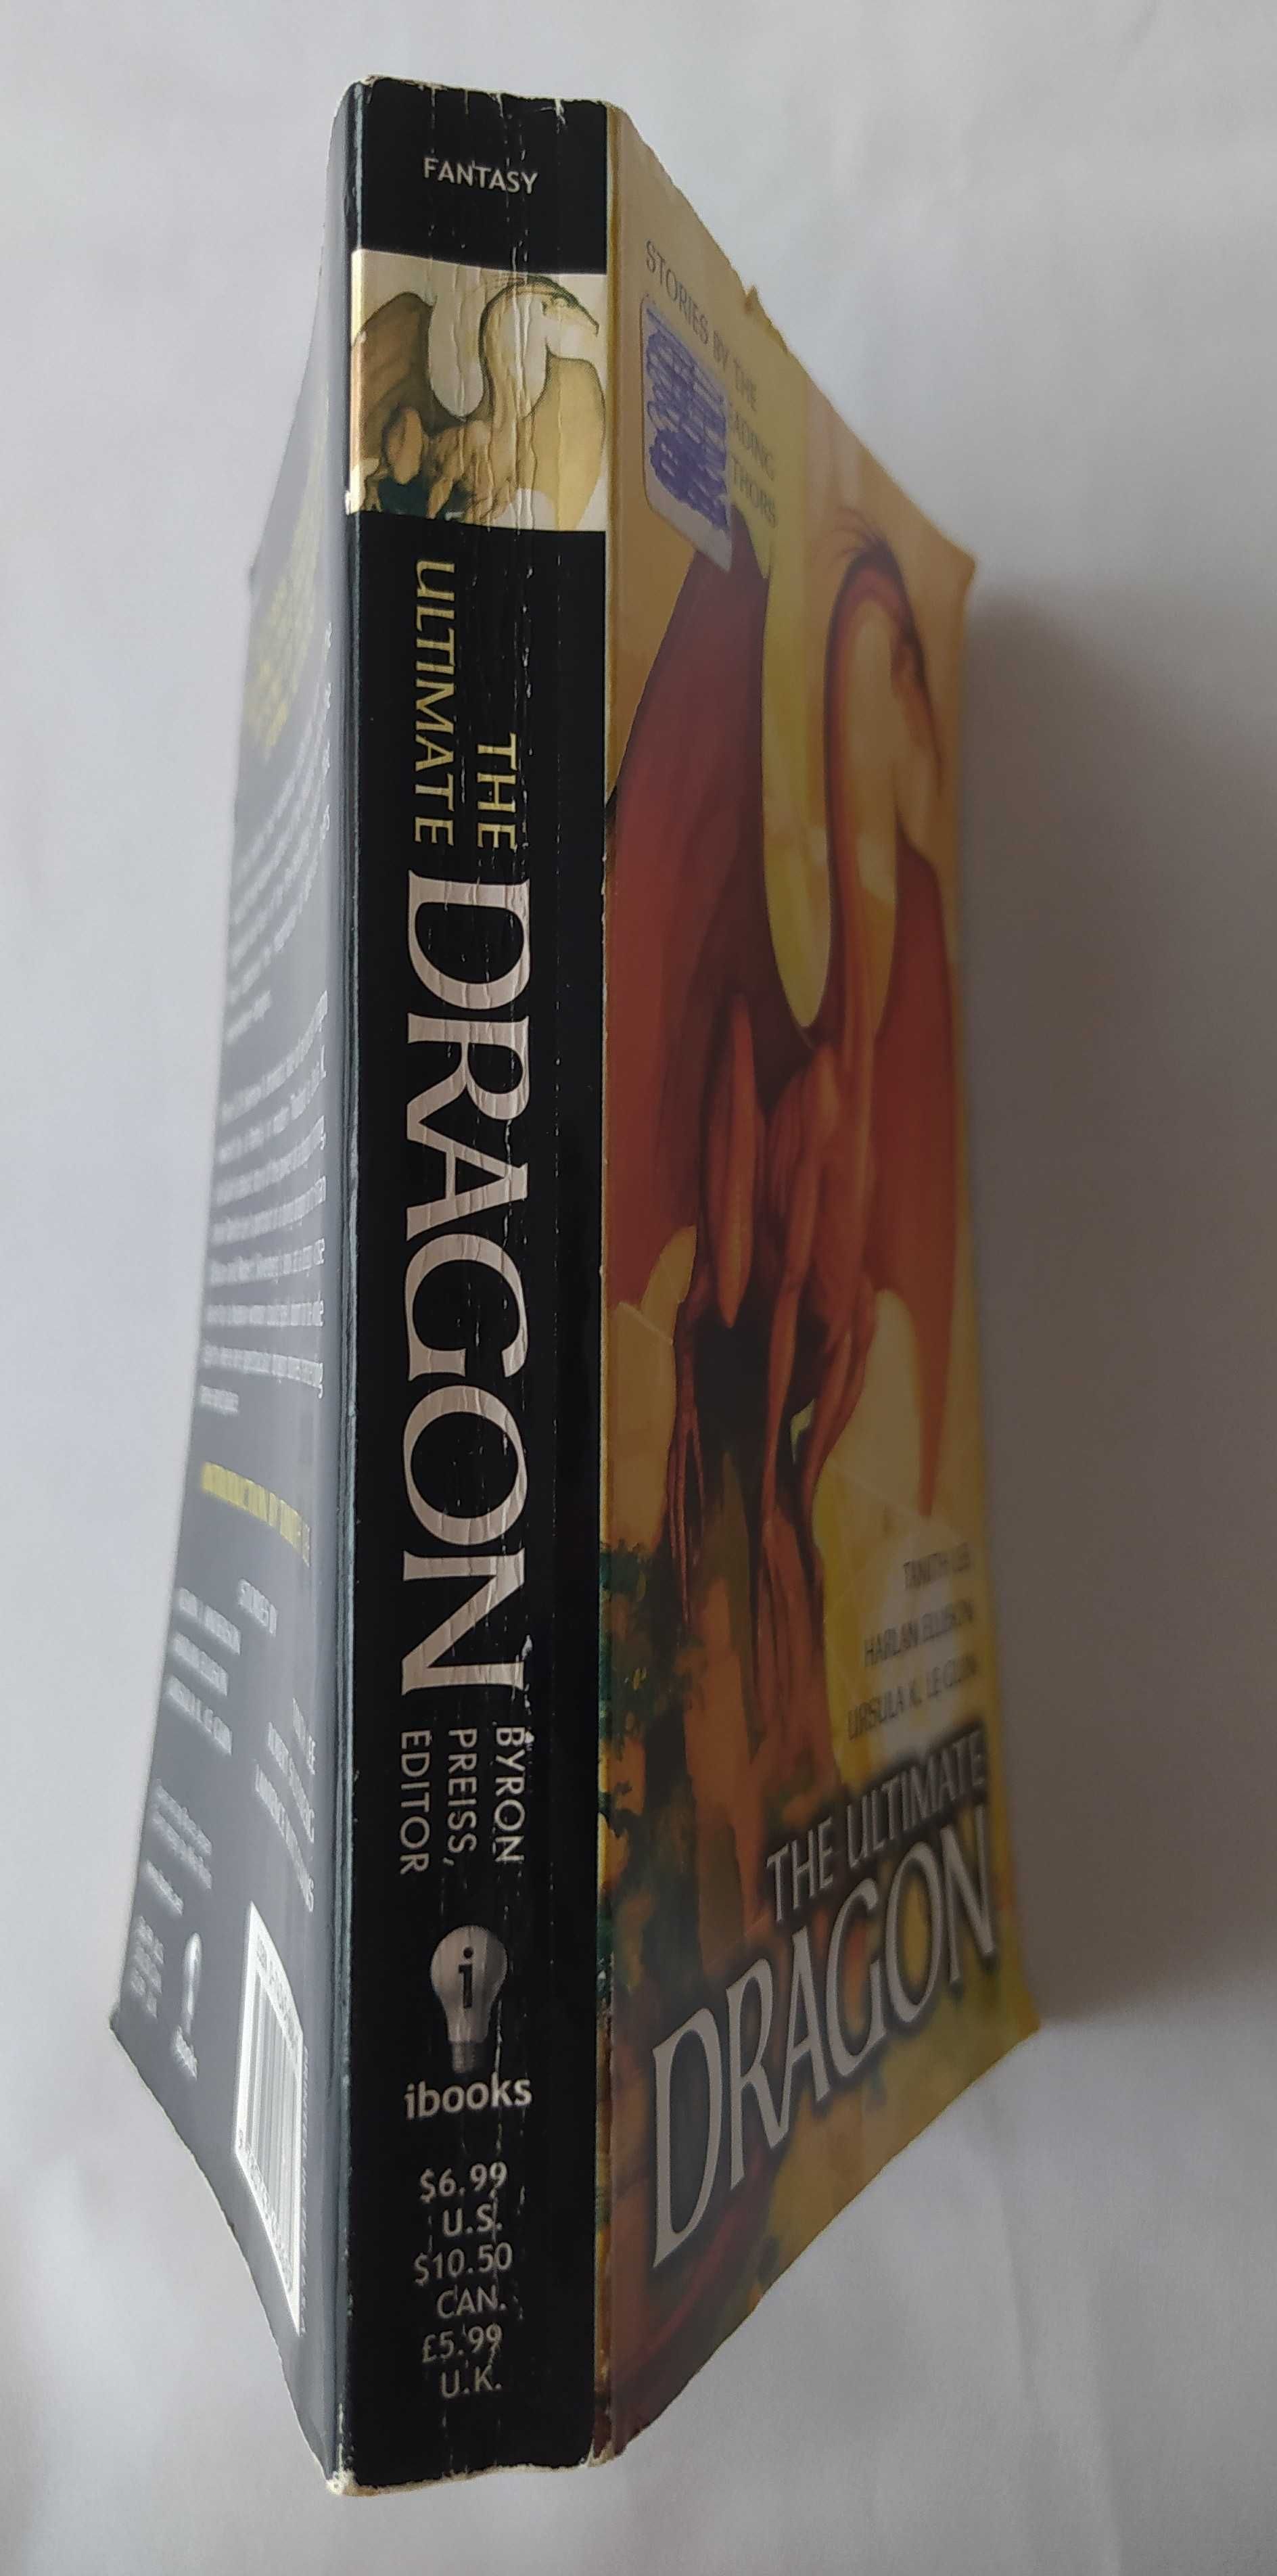 The ultimate dragon – Byron Preiss